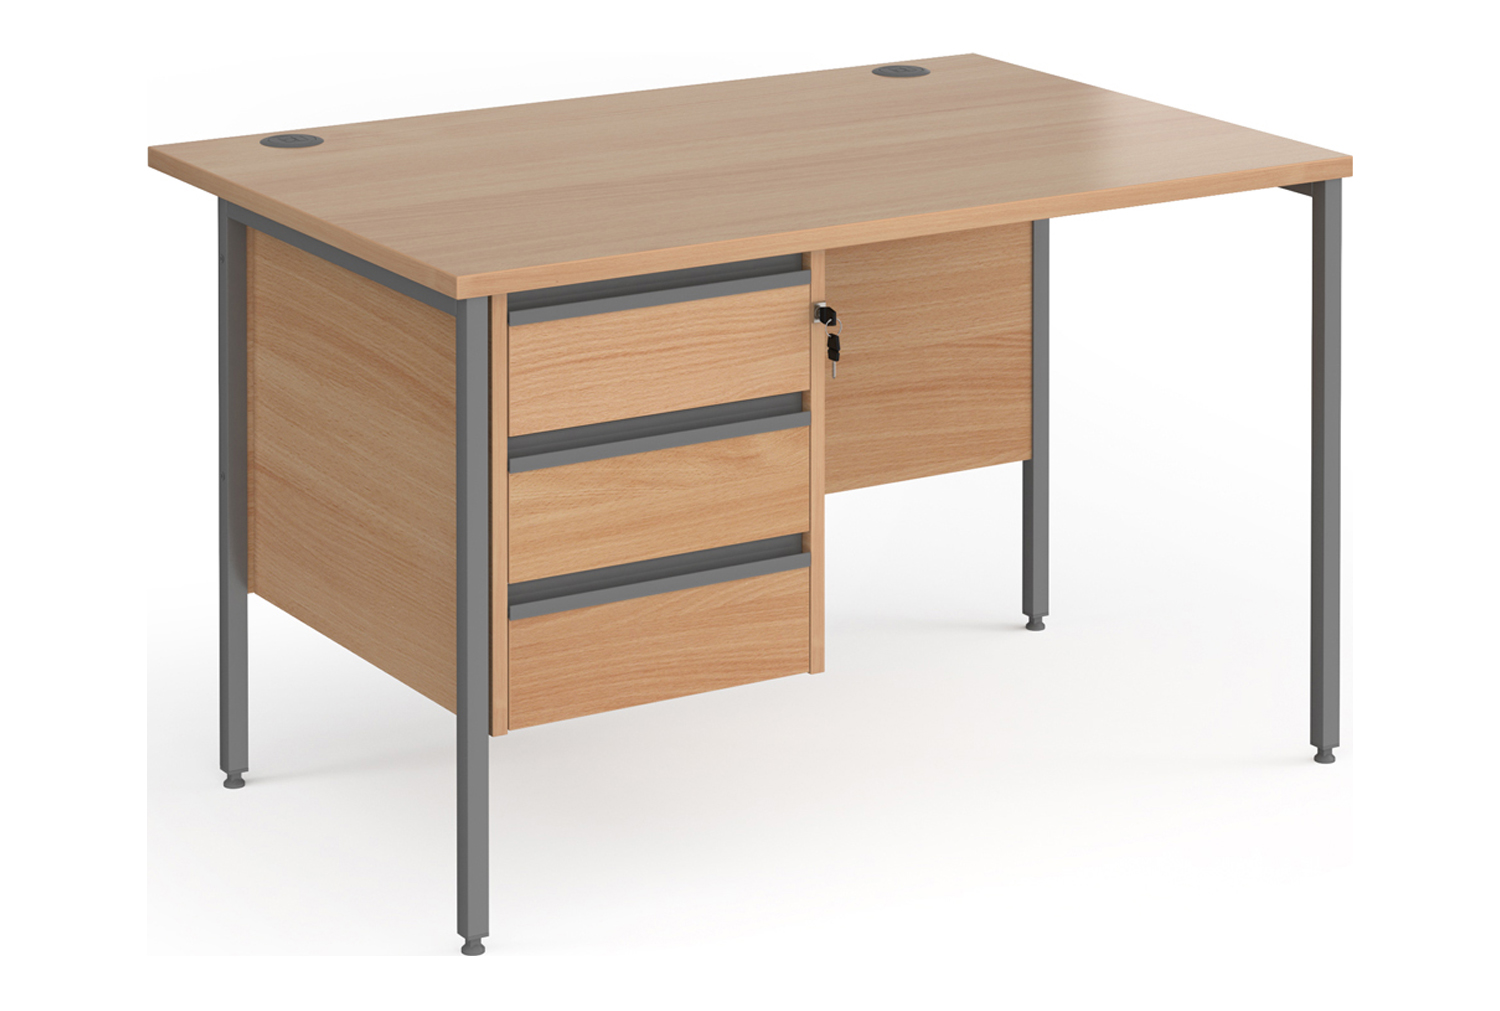 Value Line Classic+ Rectangular H-Leg Office Desk 3 Drawers (Graphite Leg), 120wx80dx73h (cm), Beech